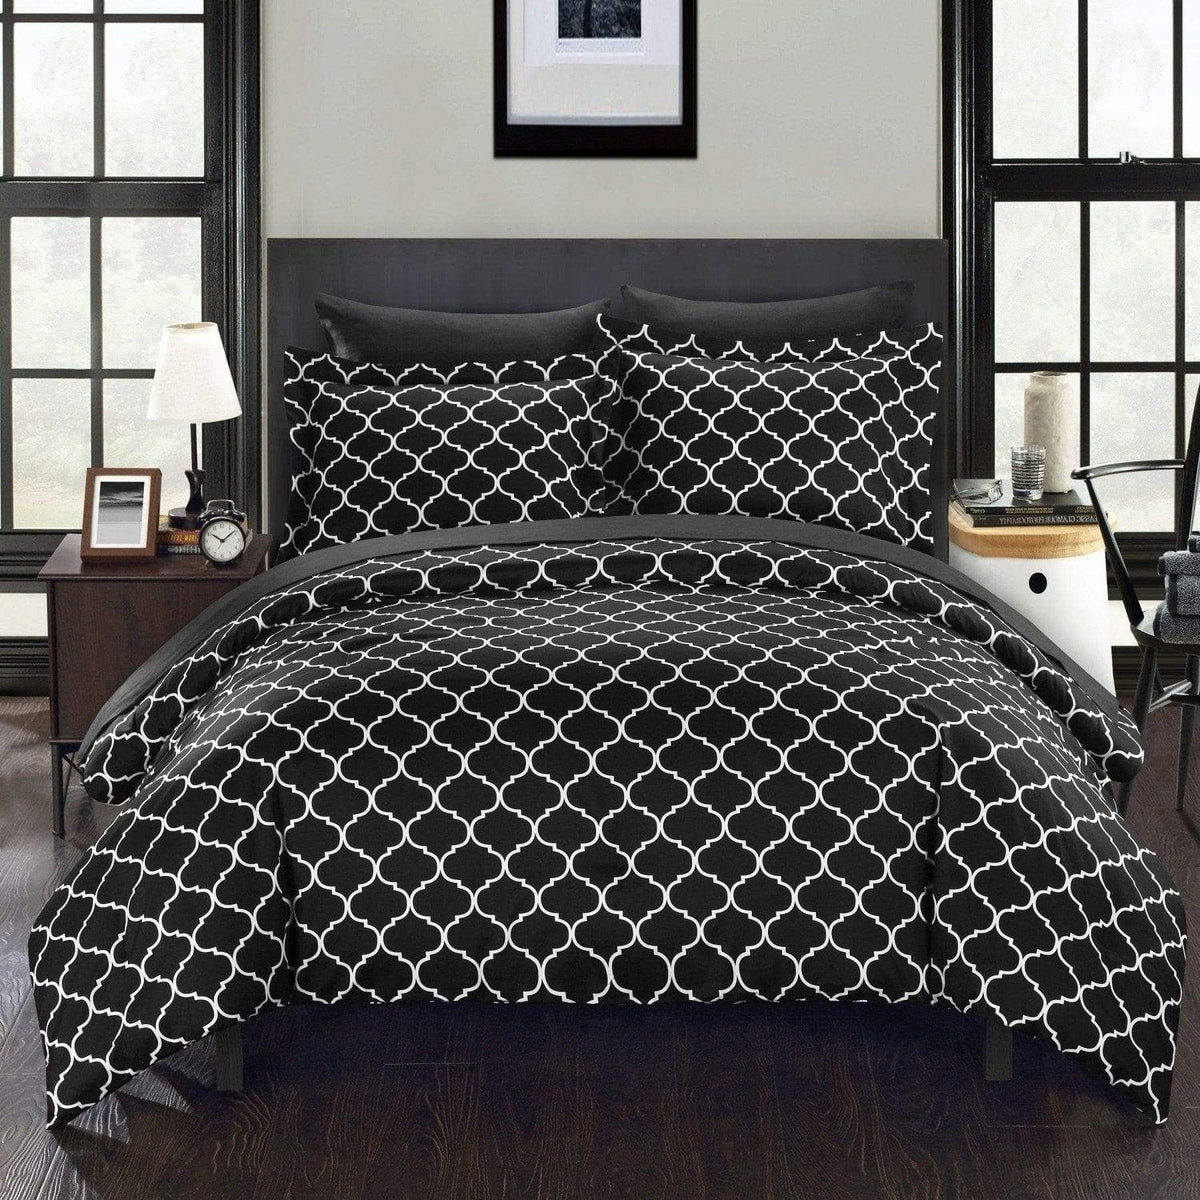 Chic Home Heather 7 Piece Reversible Comforter Set Black